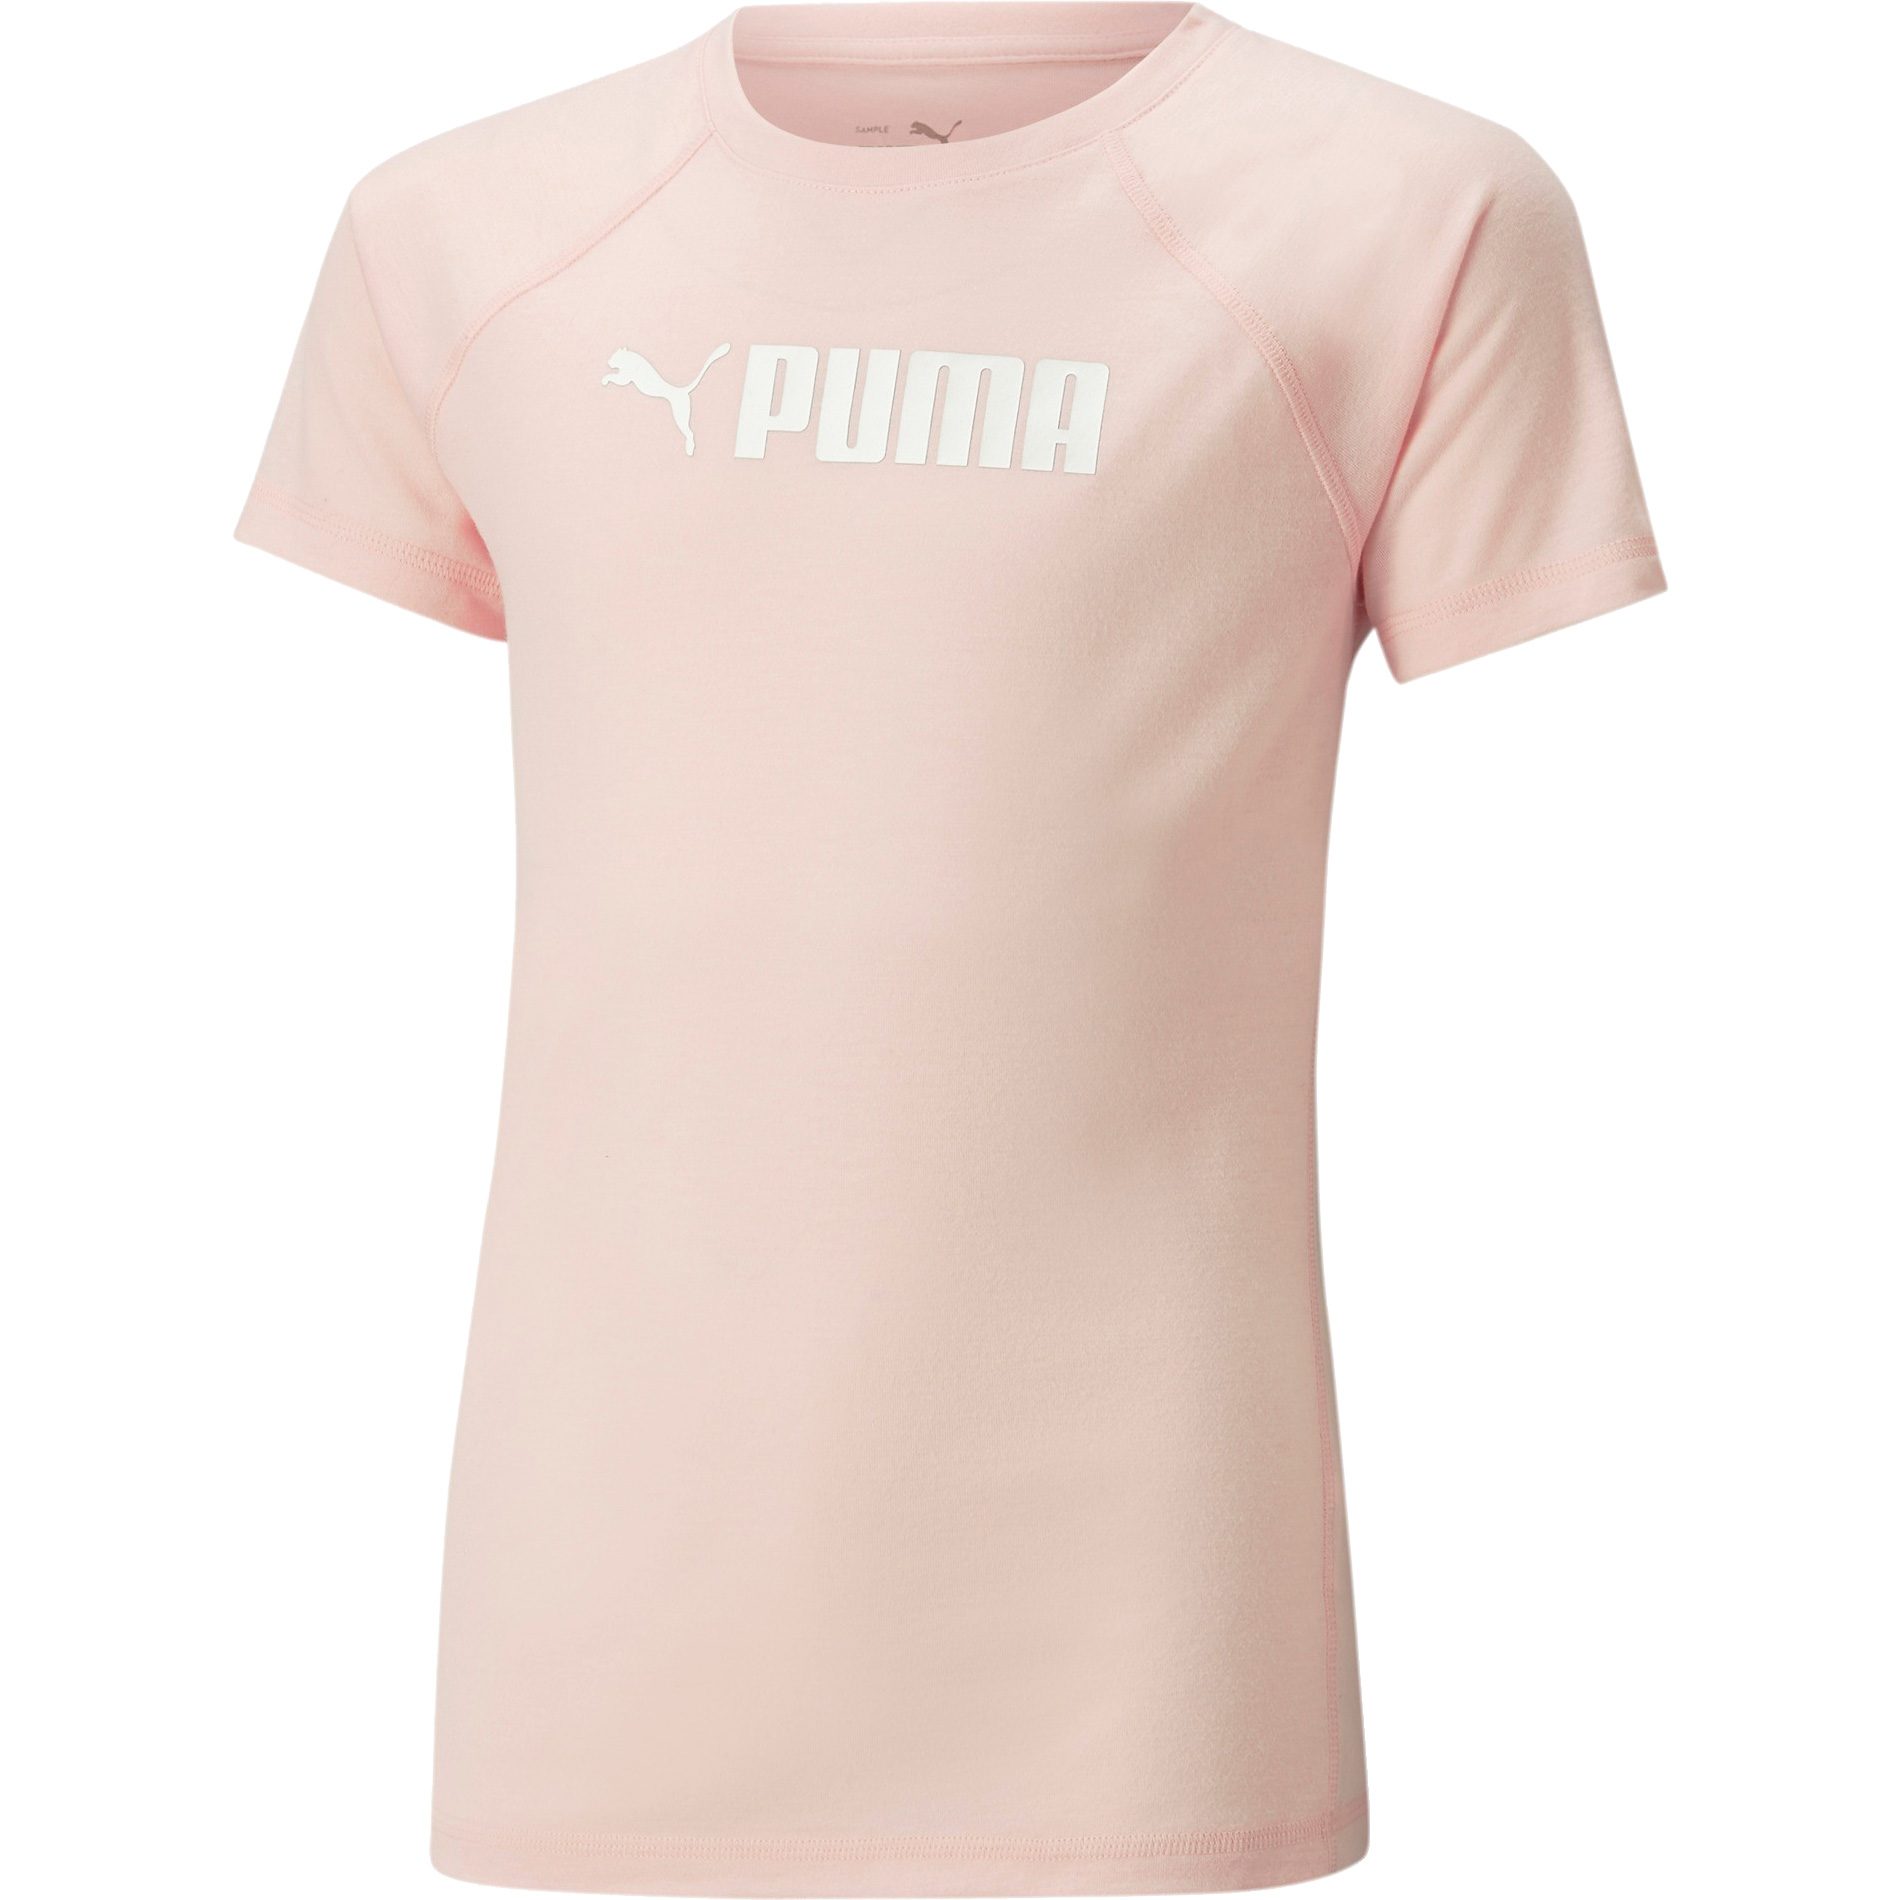 Puma - Fit T-shirt Girls rose dust at Sport Bittl Shop